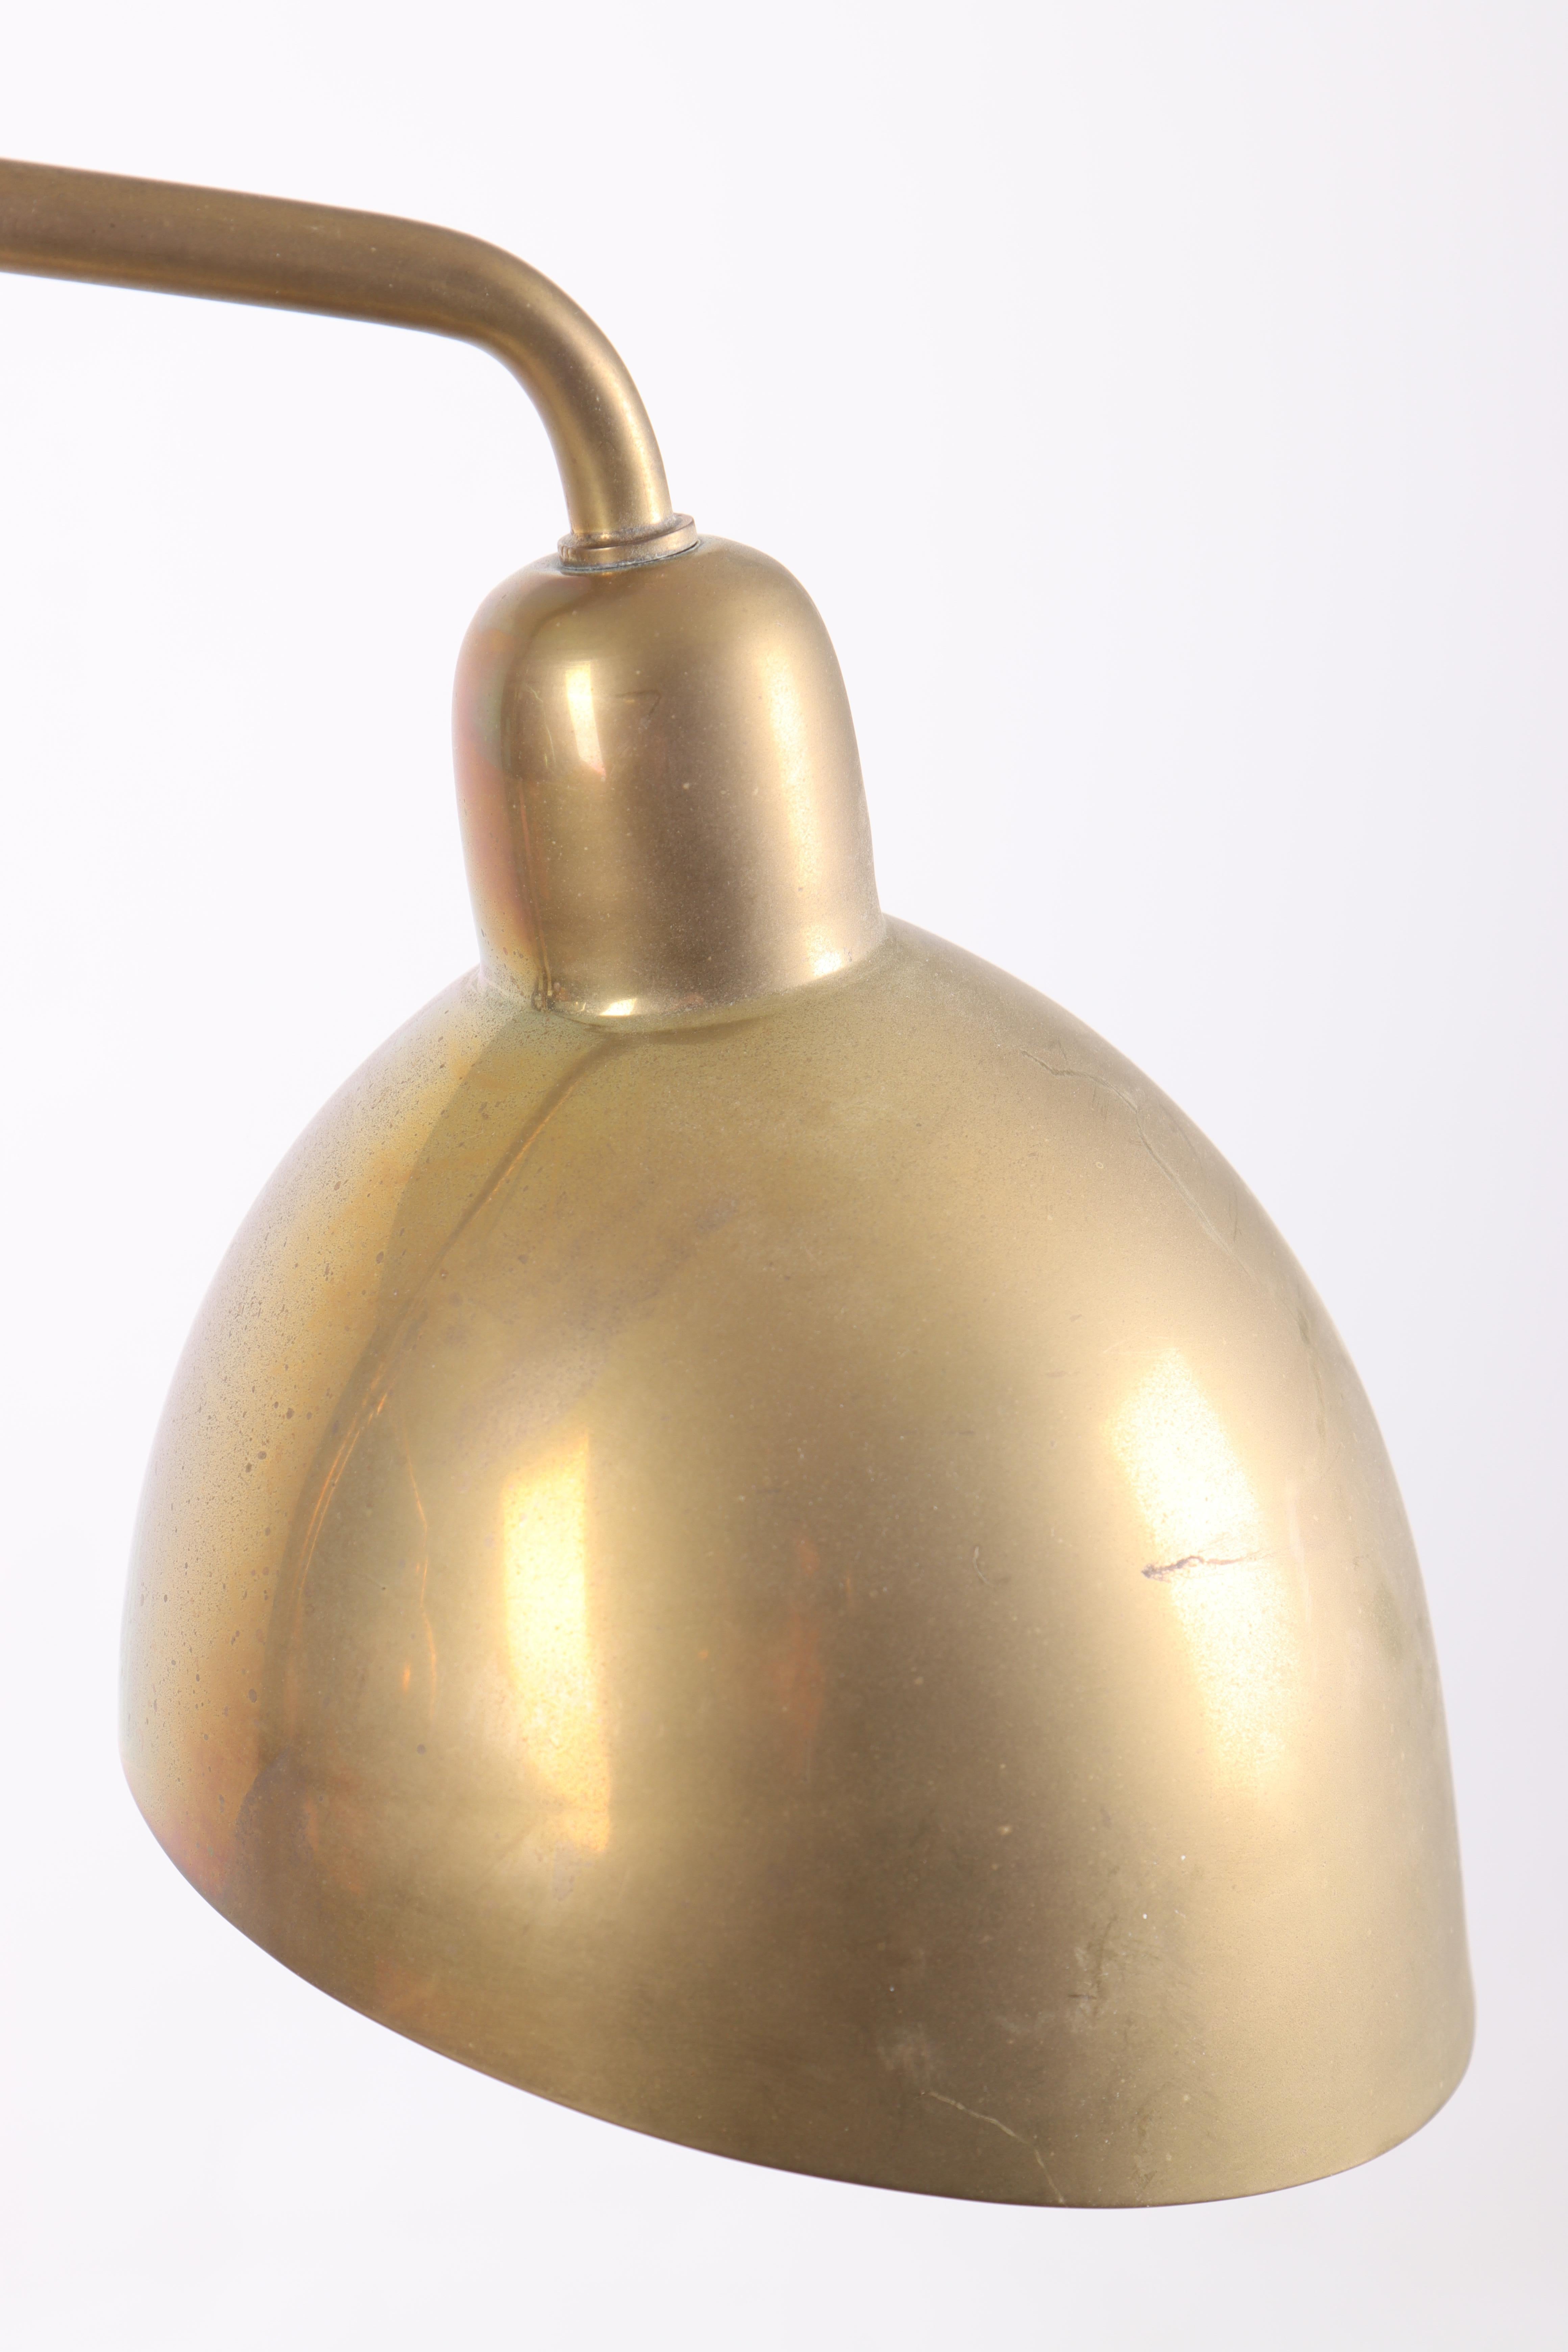 Danish Double Table Lamp in Brass by Louis Poulsen, 1940s For Sale